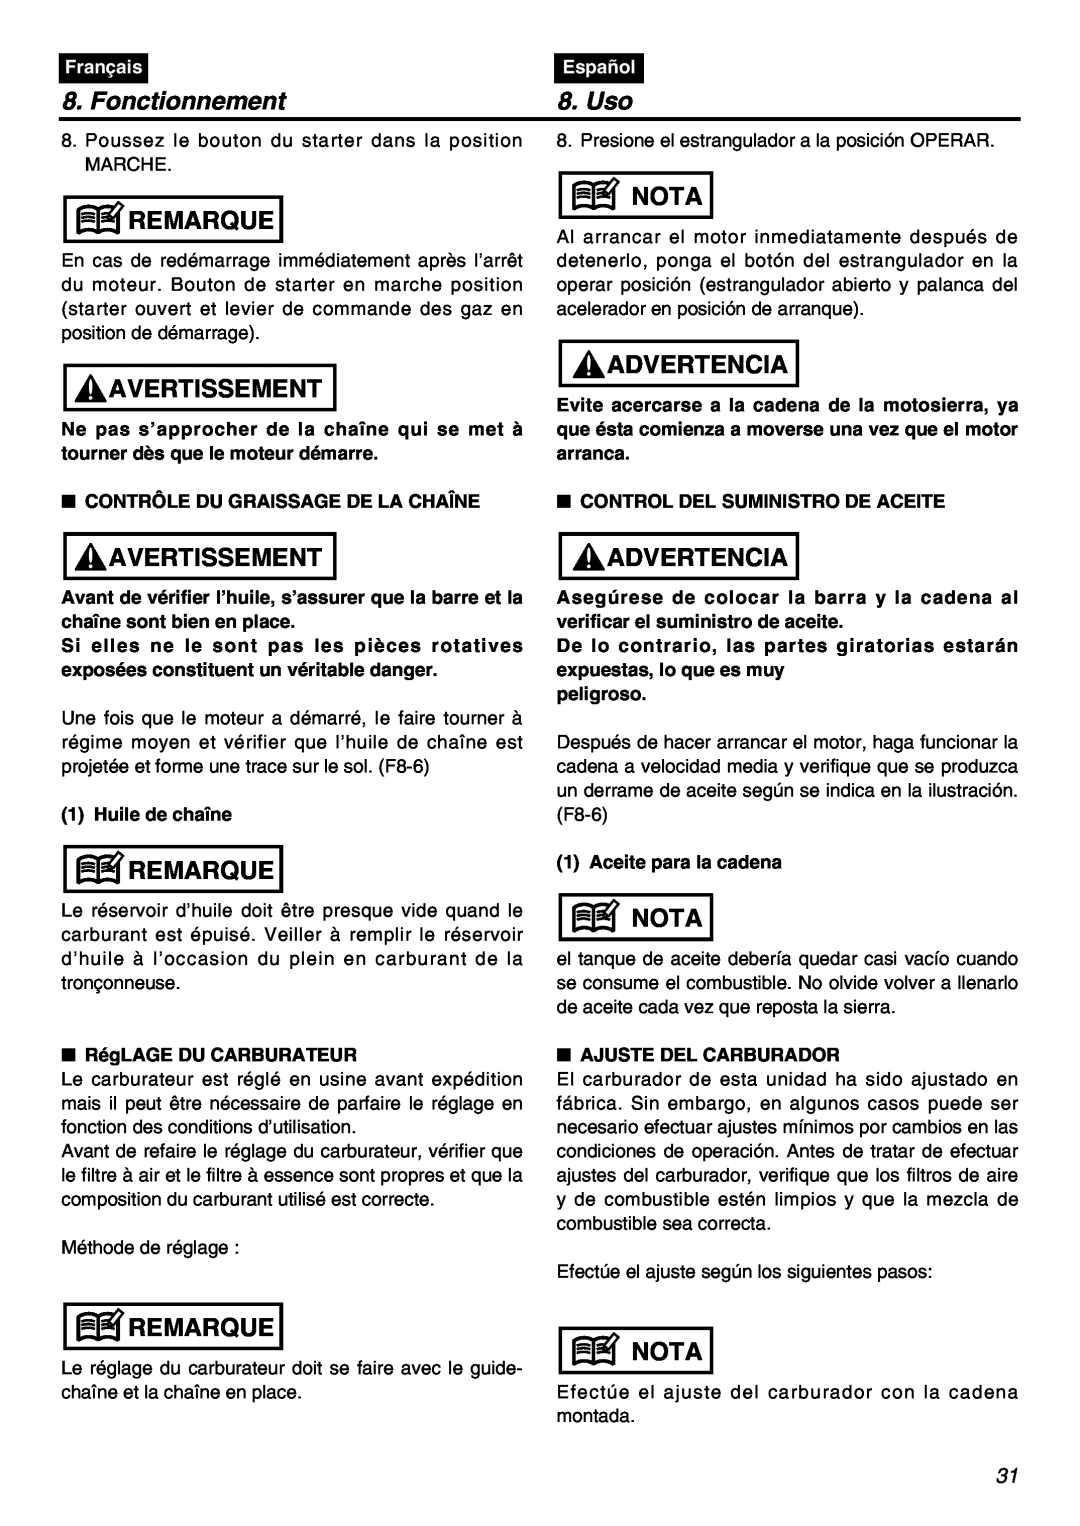 RedMax GZ400 manual Fonctionnement, Uso, Remarque, Avertissement, Nota, Advertencia 